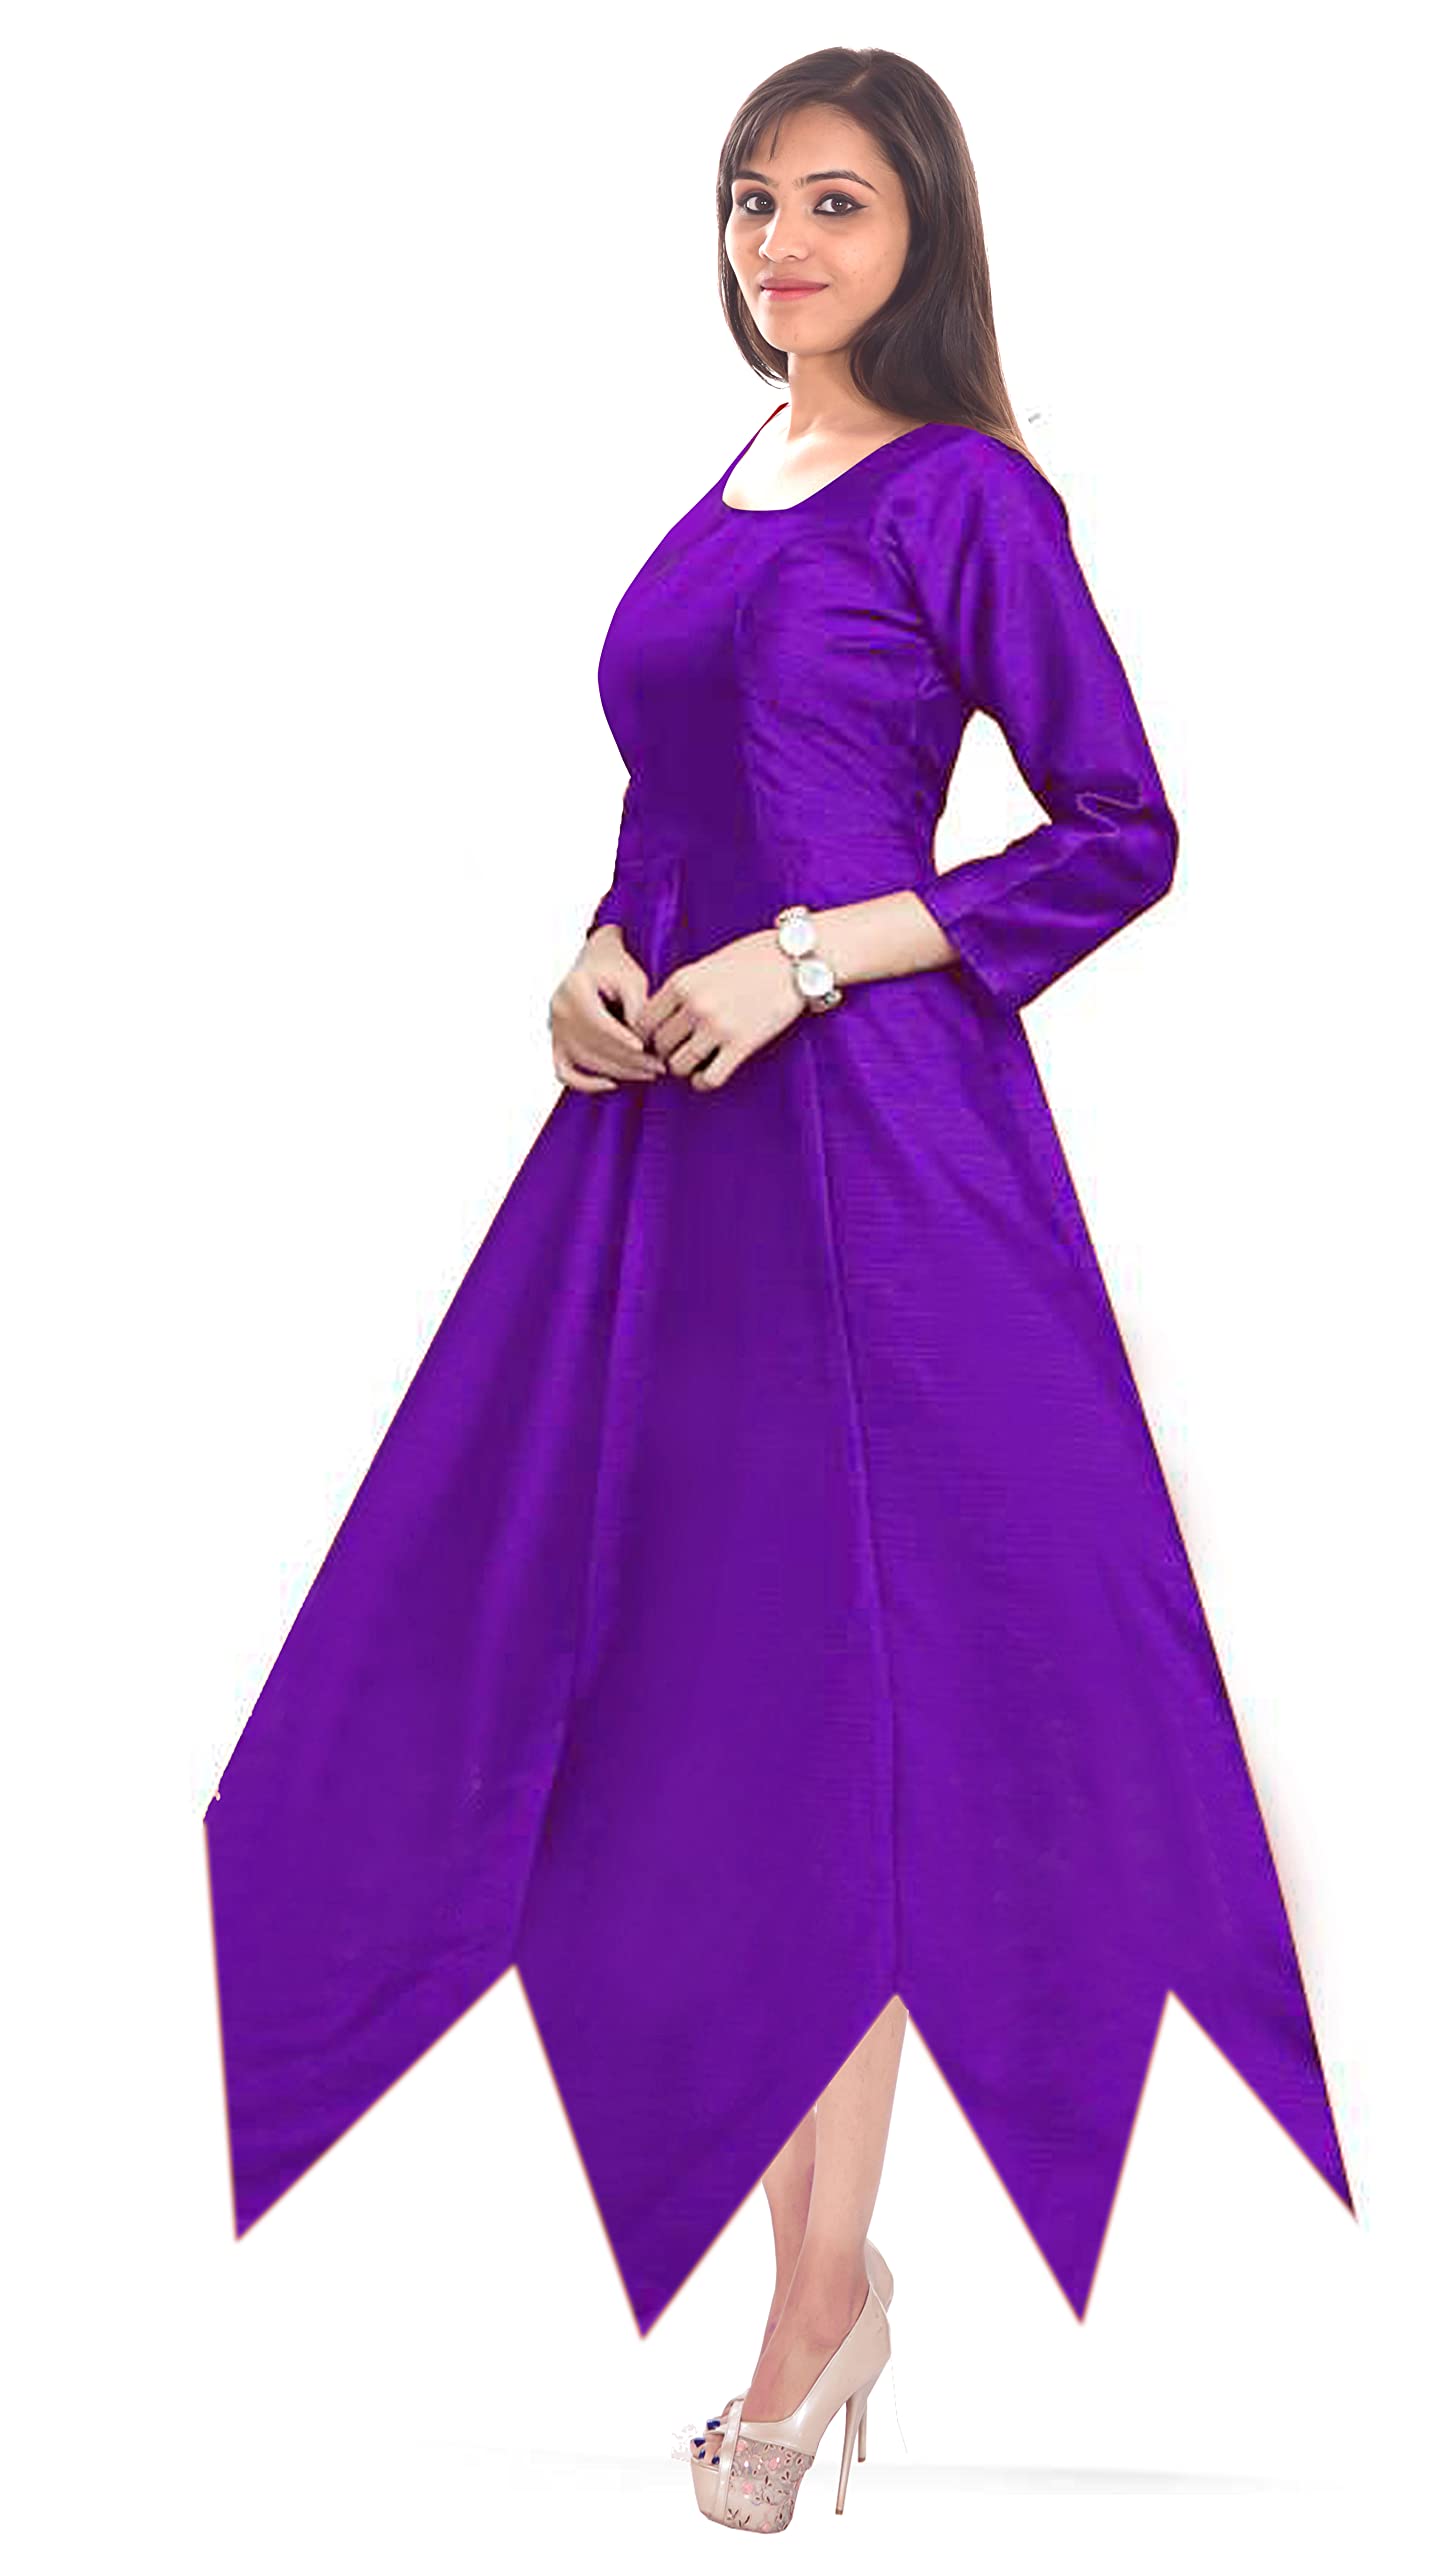 Lakkar haveli Beautiful Women's Tunic Art Dupien Poly Silk Handkerchief Dress Top Casual Frock Suit Purple Color Wedding Wear Plus Size (3XL)